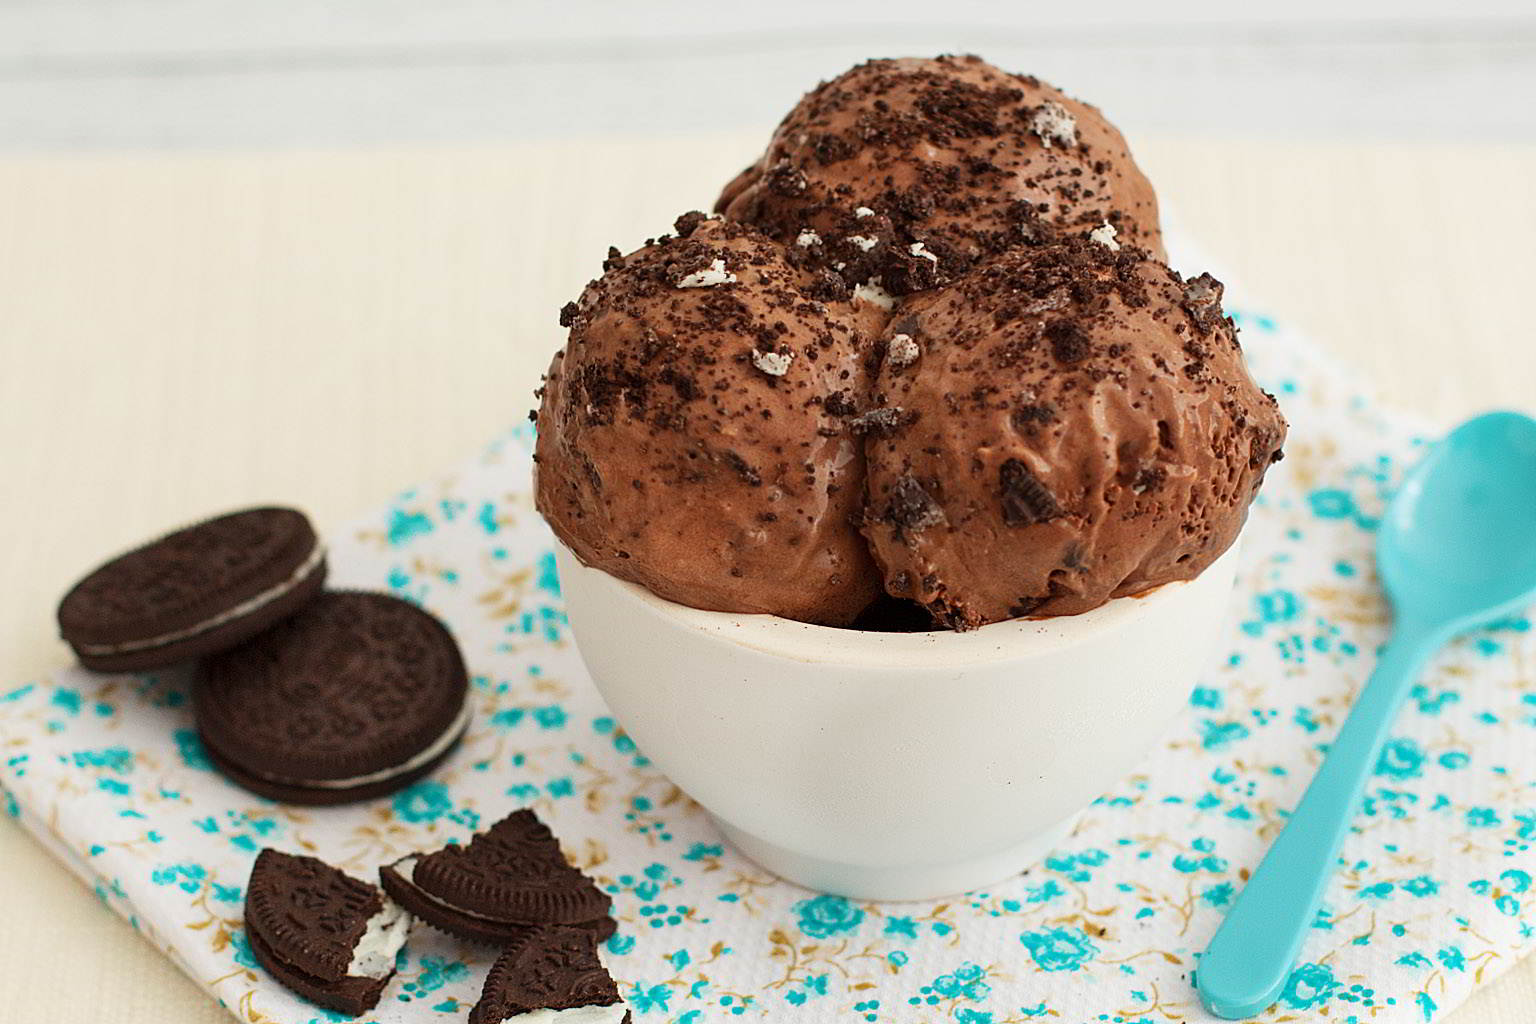 Receta de helado de chocolate casero con trocitos de oreo